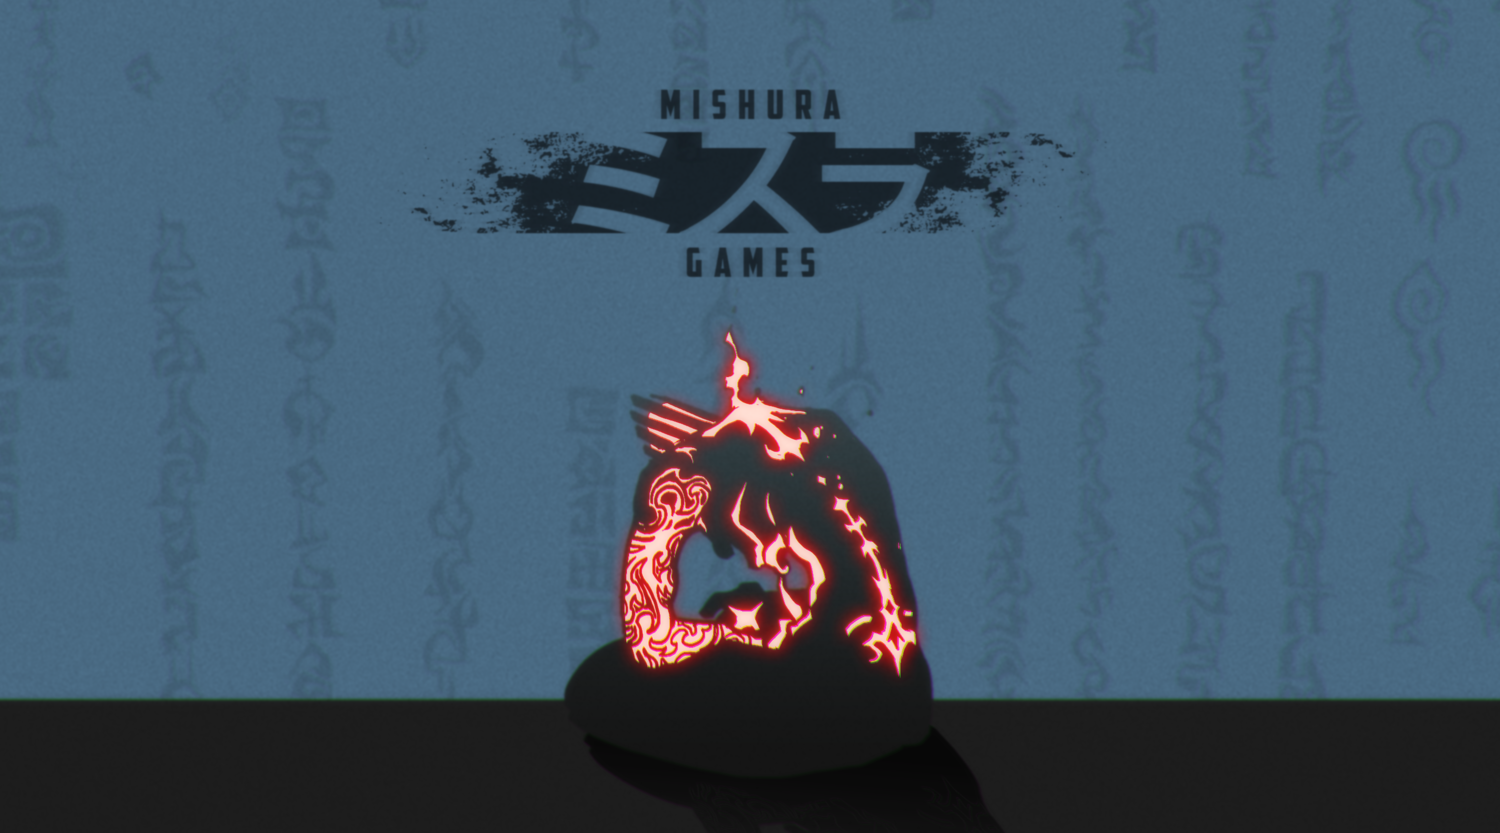 www.mishura-games.com